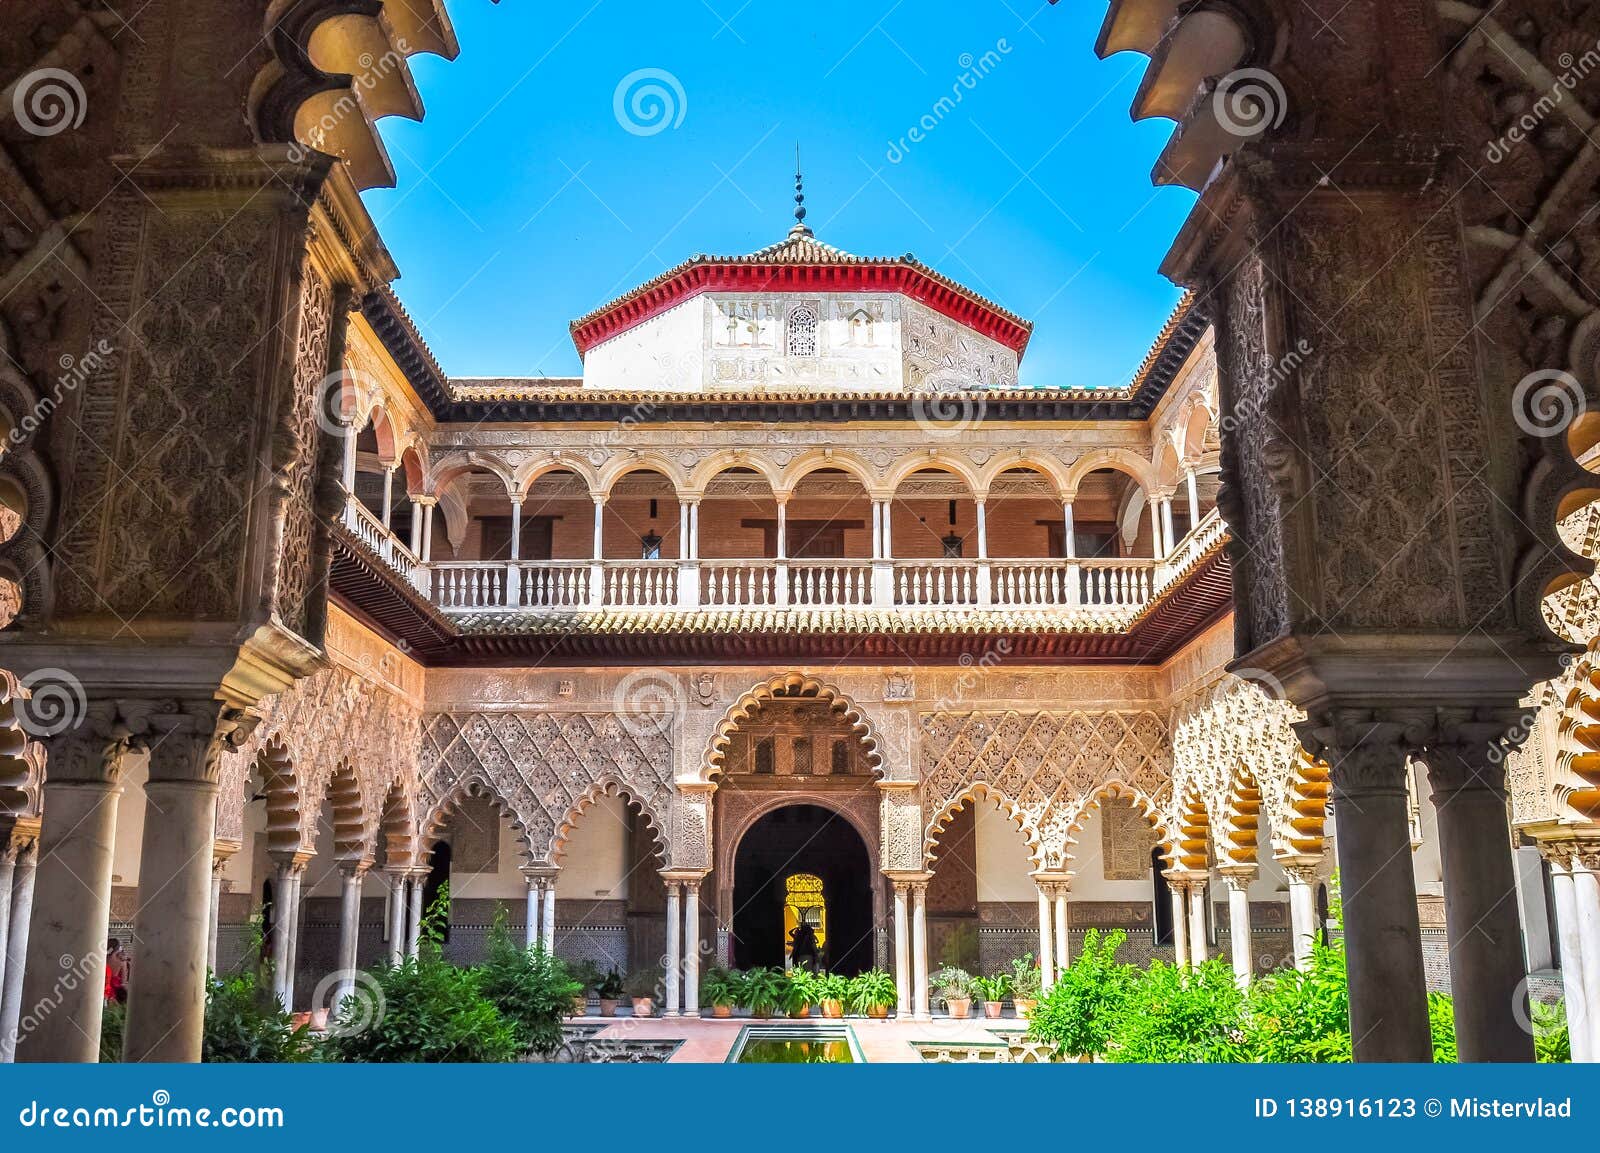 seville alcazar courtyard, spain